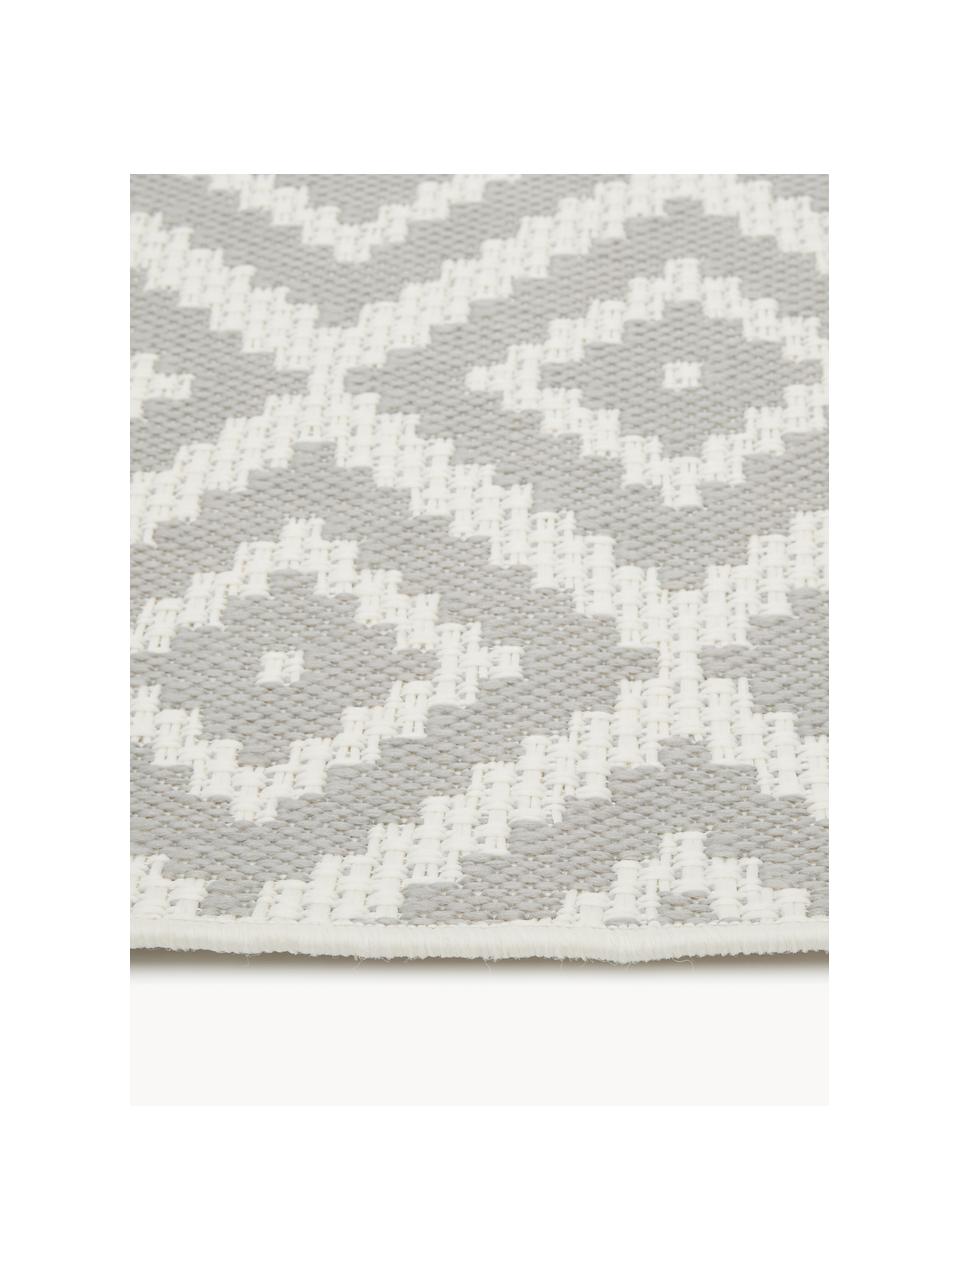 Interiérový/exteriérový koberec Miami, 70 % polypropylen, 30 % polyester, Šedá, bílá, Š 80 cm, D 150 cm (velikost XS)